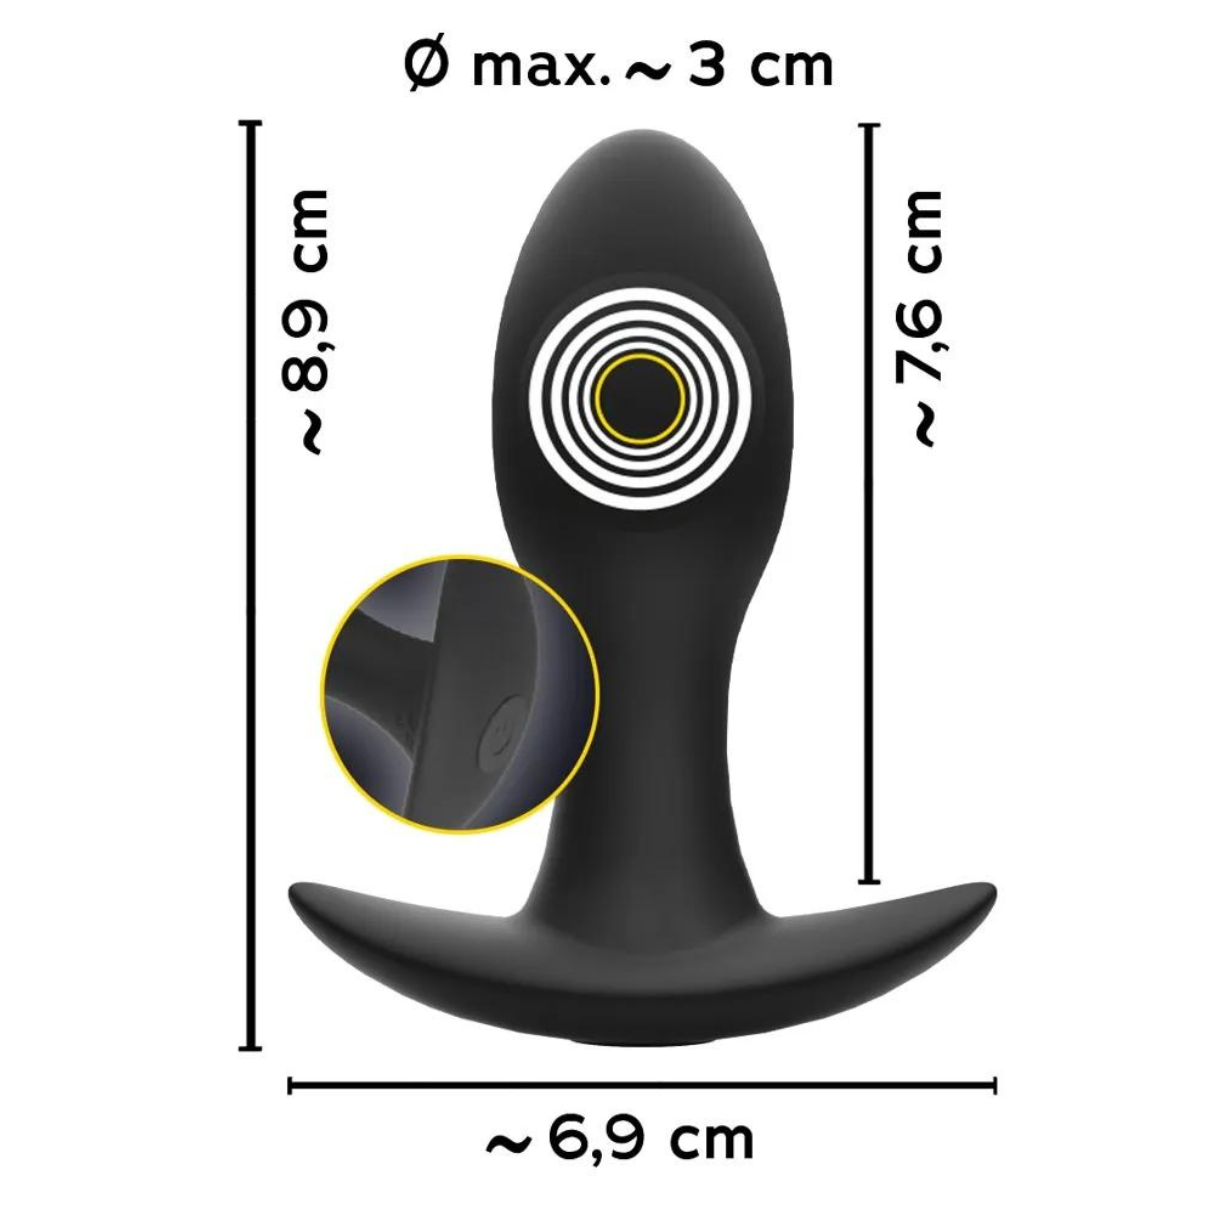 ORION Butt Plug Vibration Vibrator with